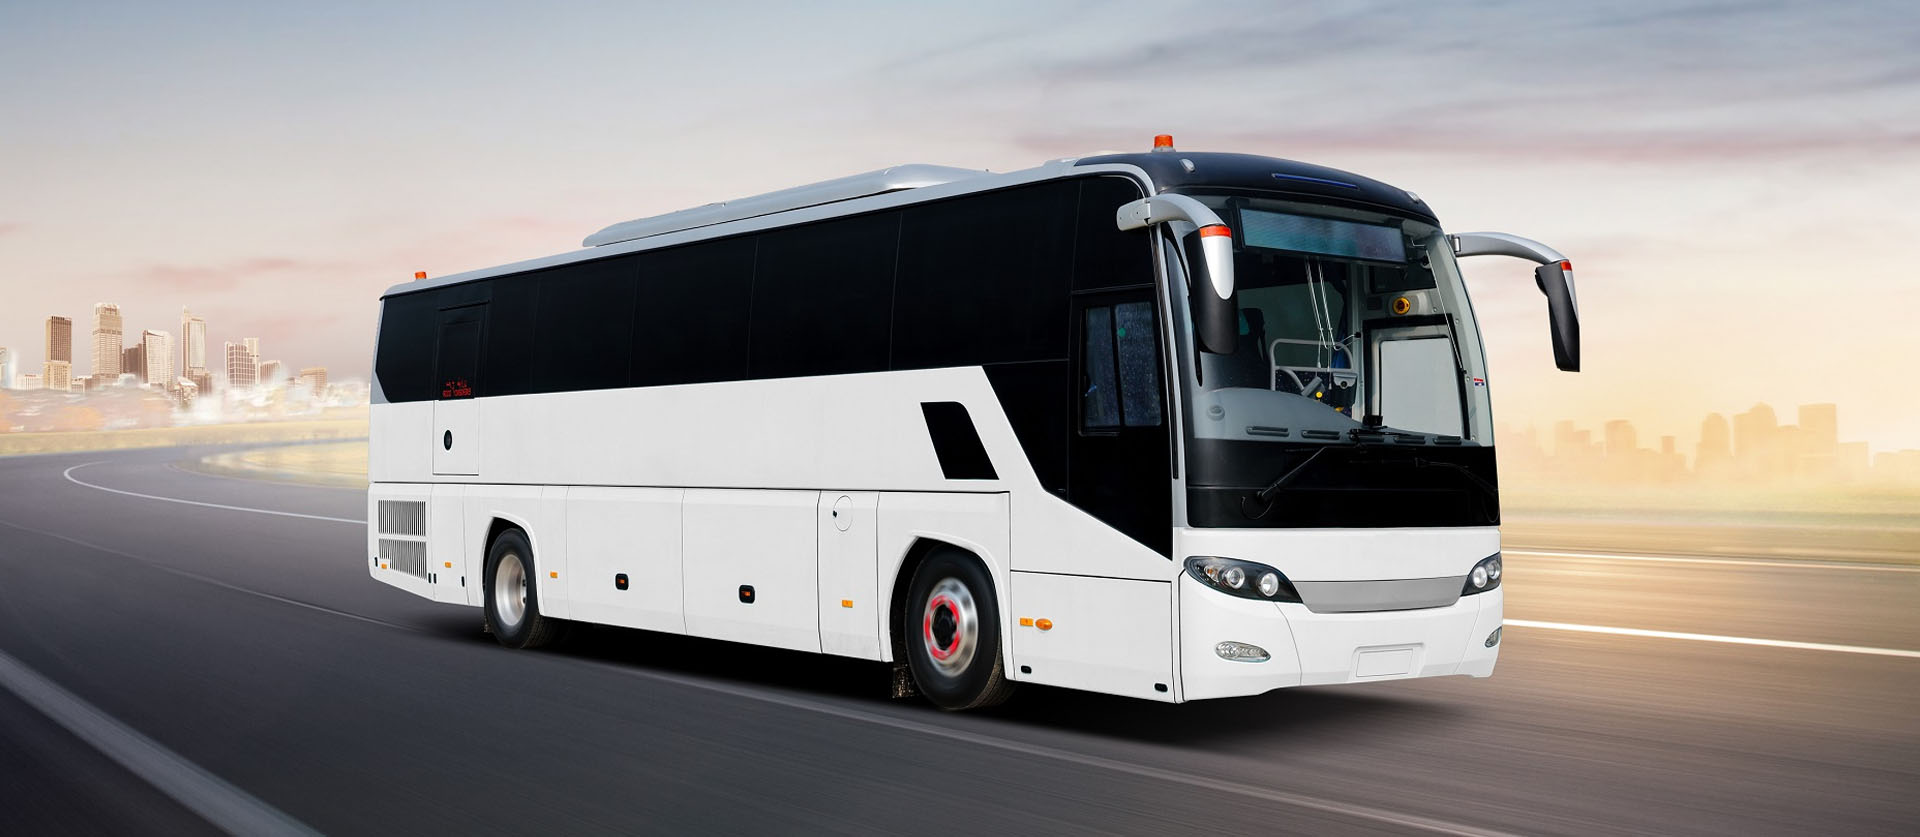 56 Passenger Coach Bus Rental Minneapolis, MN